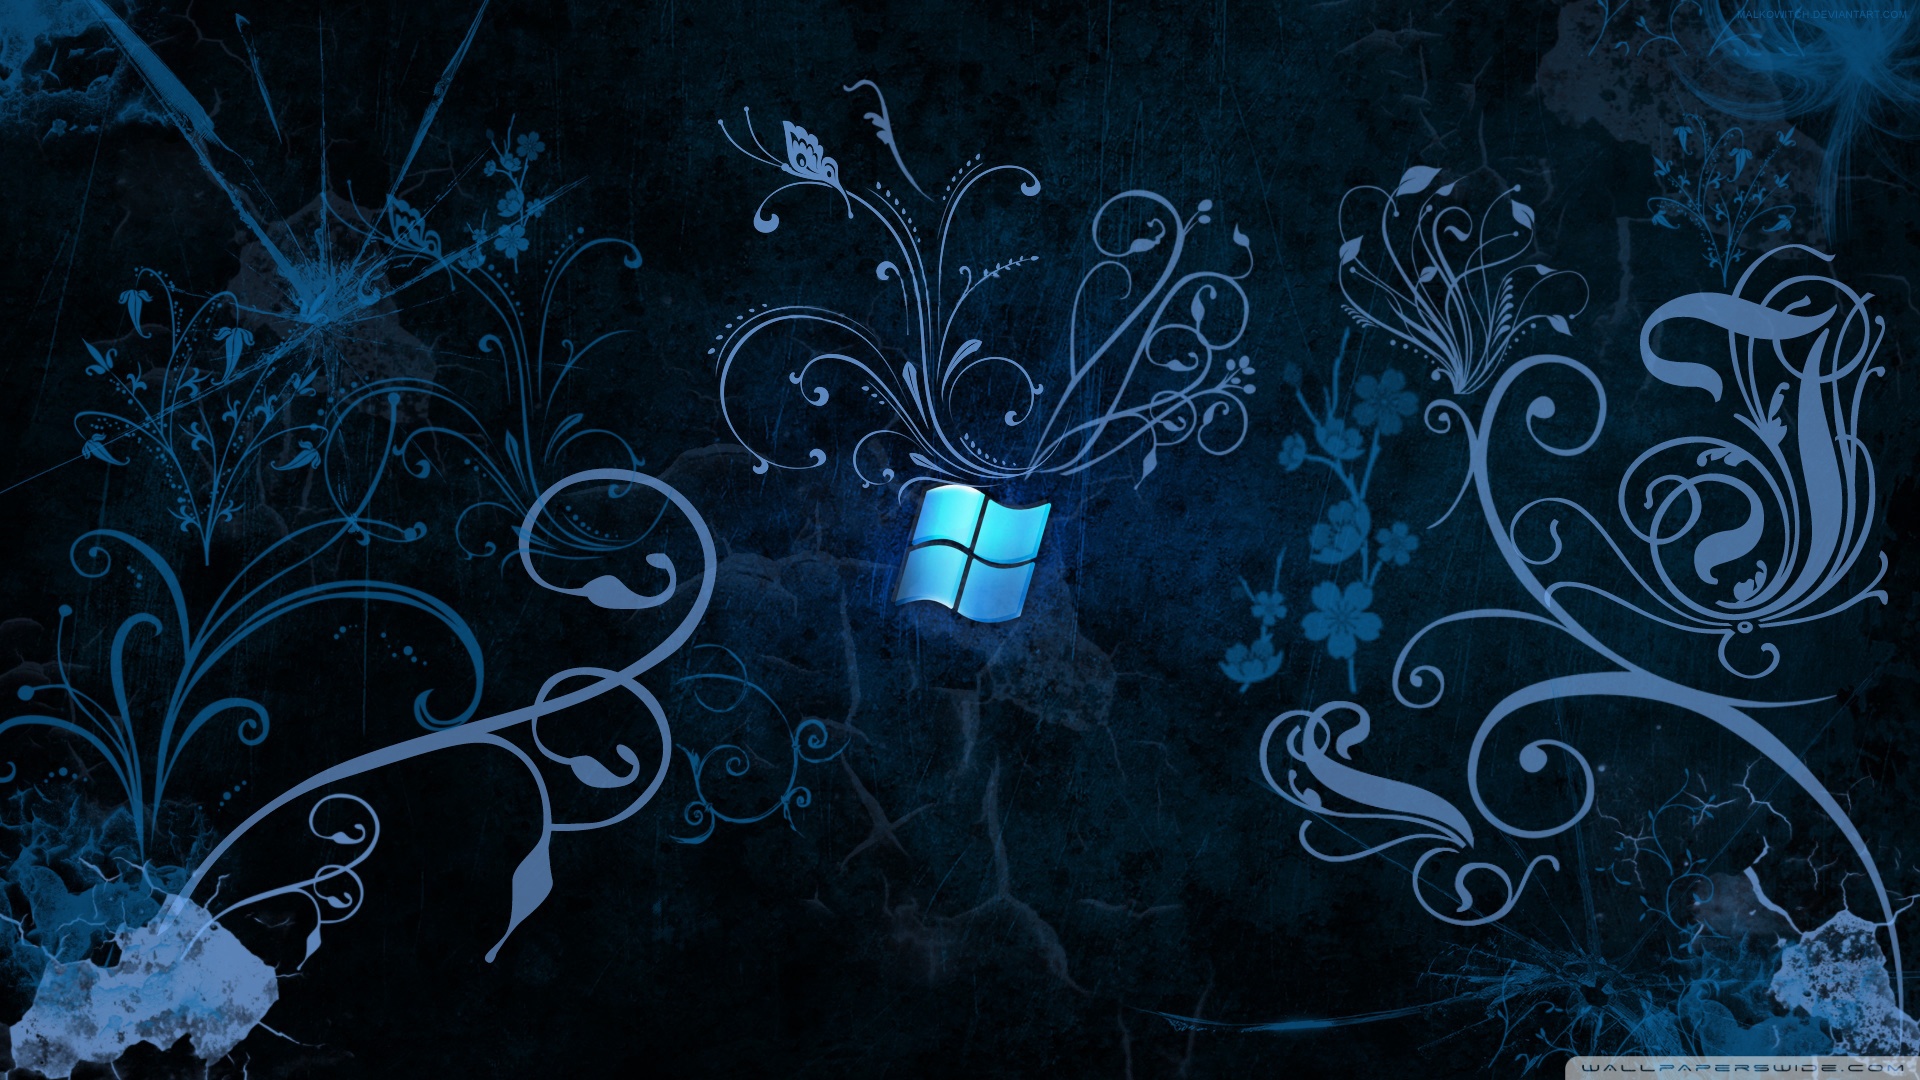  2013Computers   Windows 8 Windows 8 dark wallpaper 042092 jpg